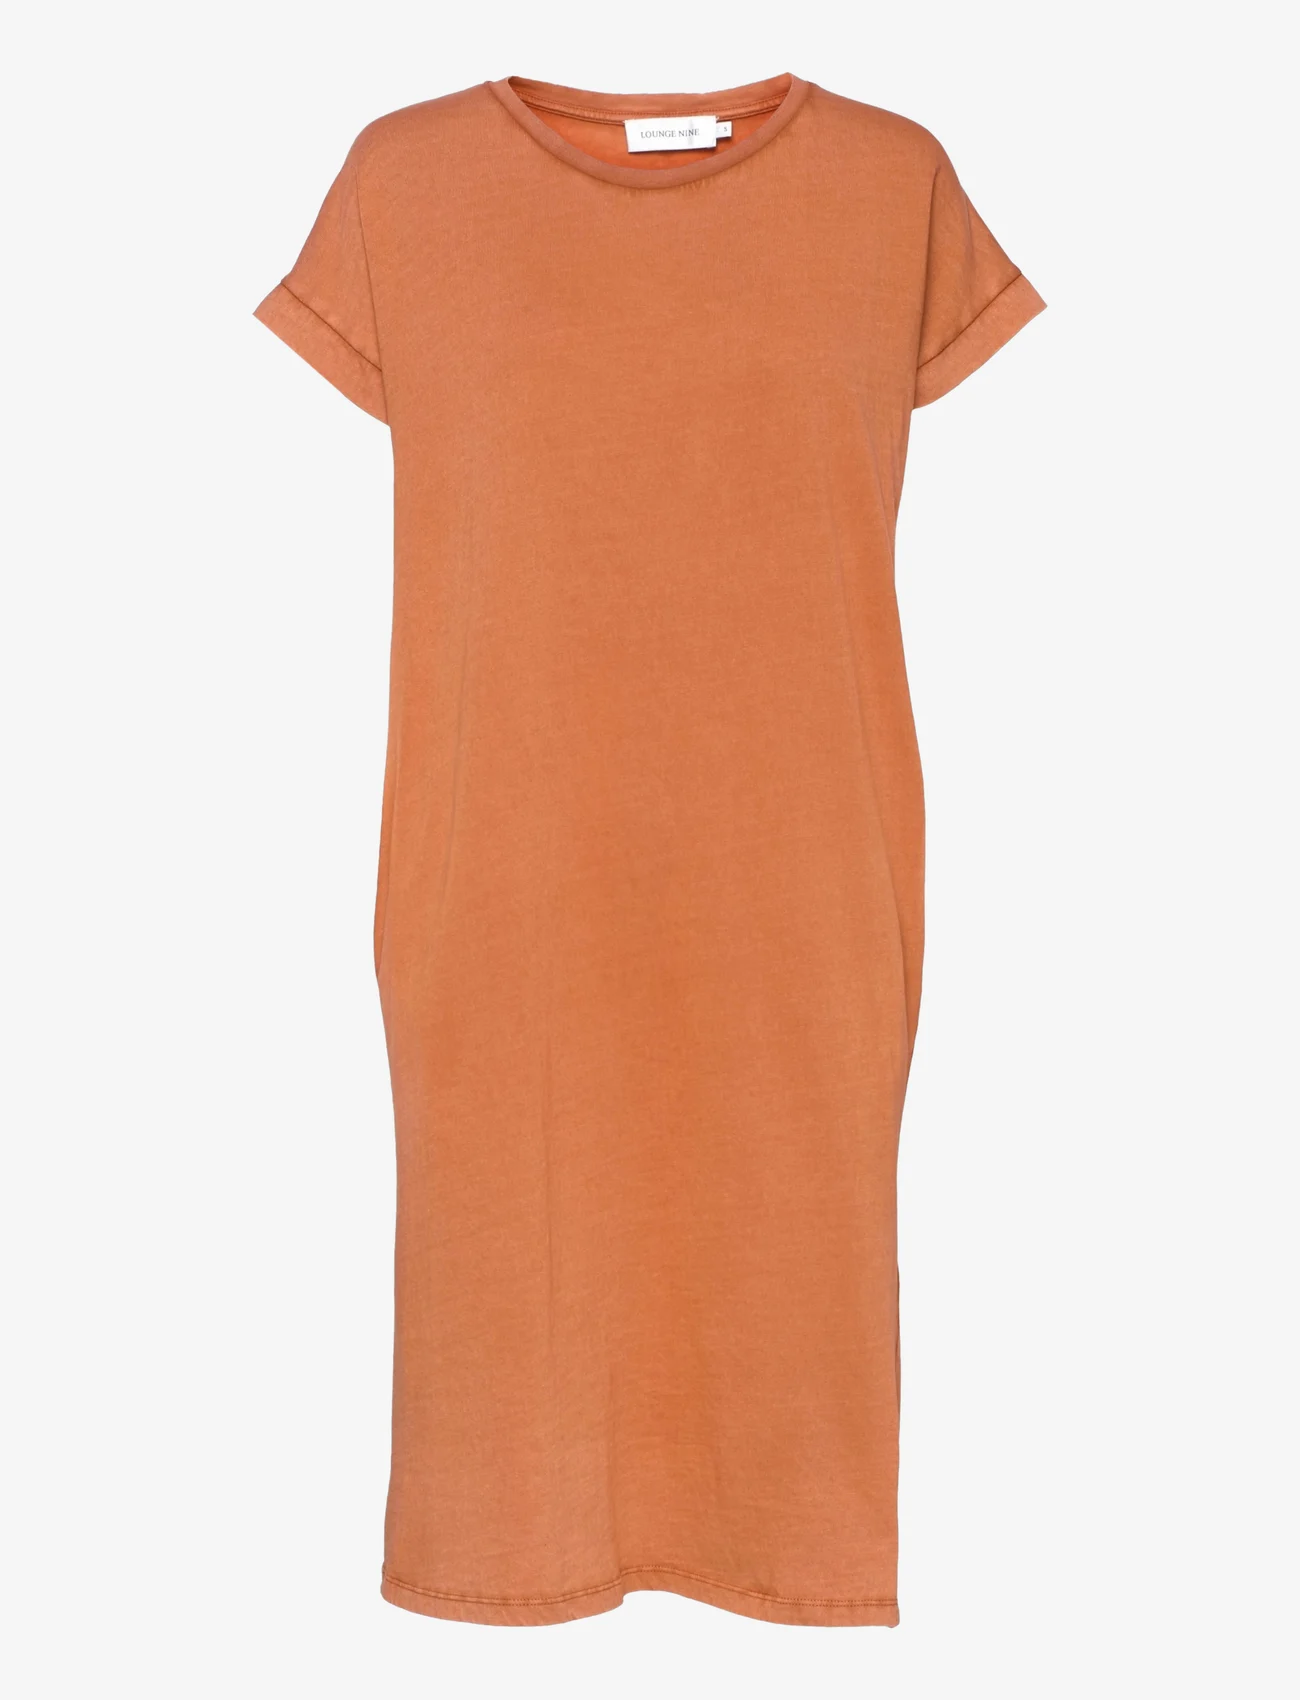 Lounge Nine - LNHanky Dress - t-shirt dresses - pecan brown - 0